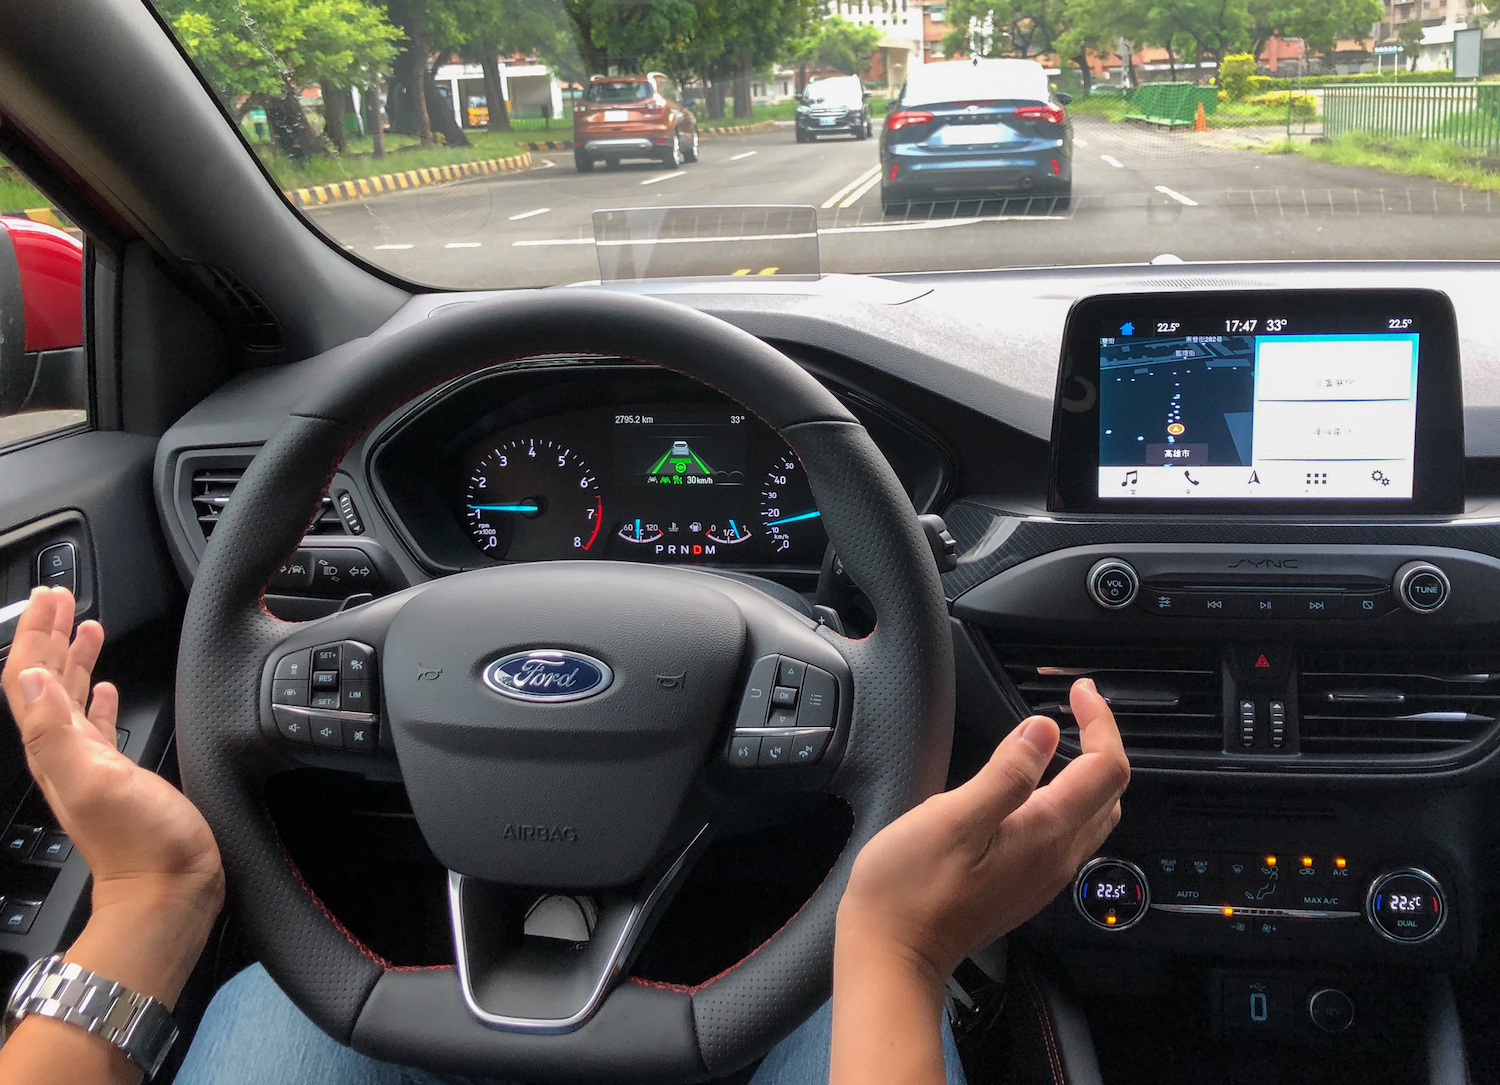 ACC Stop & Go 全速域主動式定速巡航調節系統等 Ford Co-Pilot360™ 全方位智駕科技輔助系統帶來的安全與便利性。